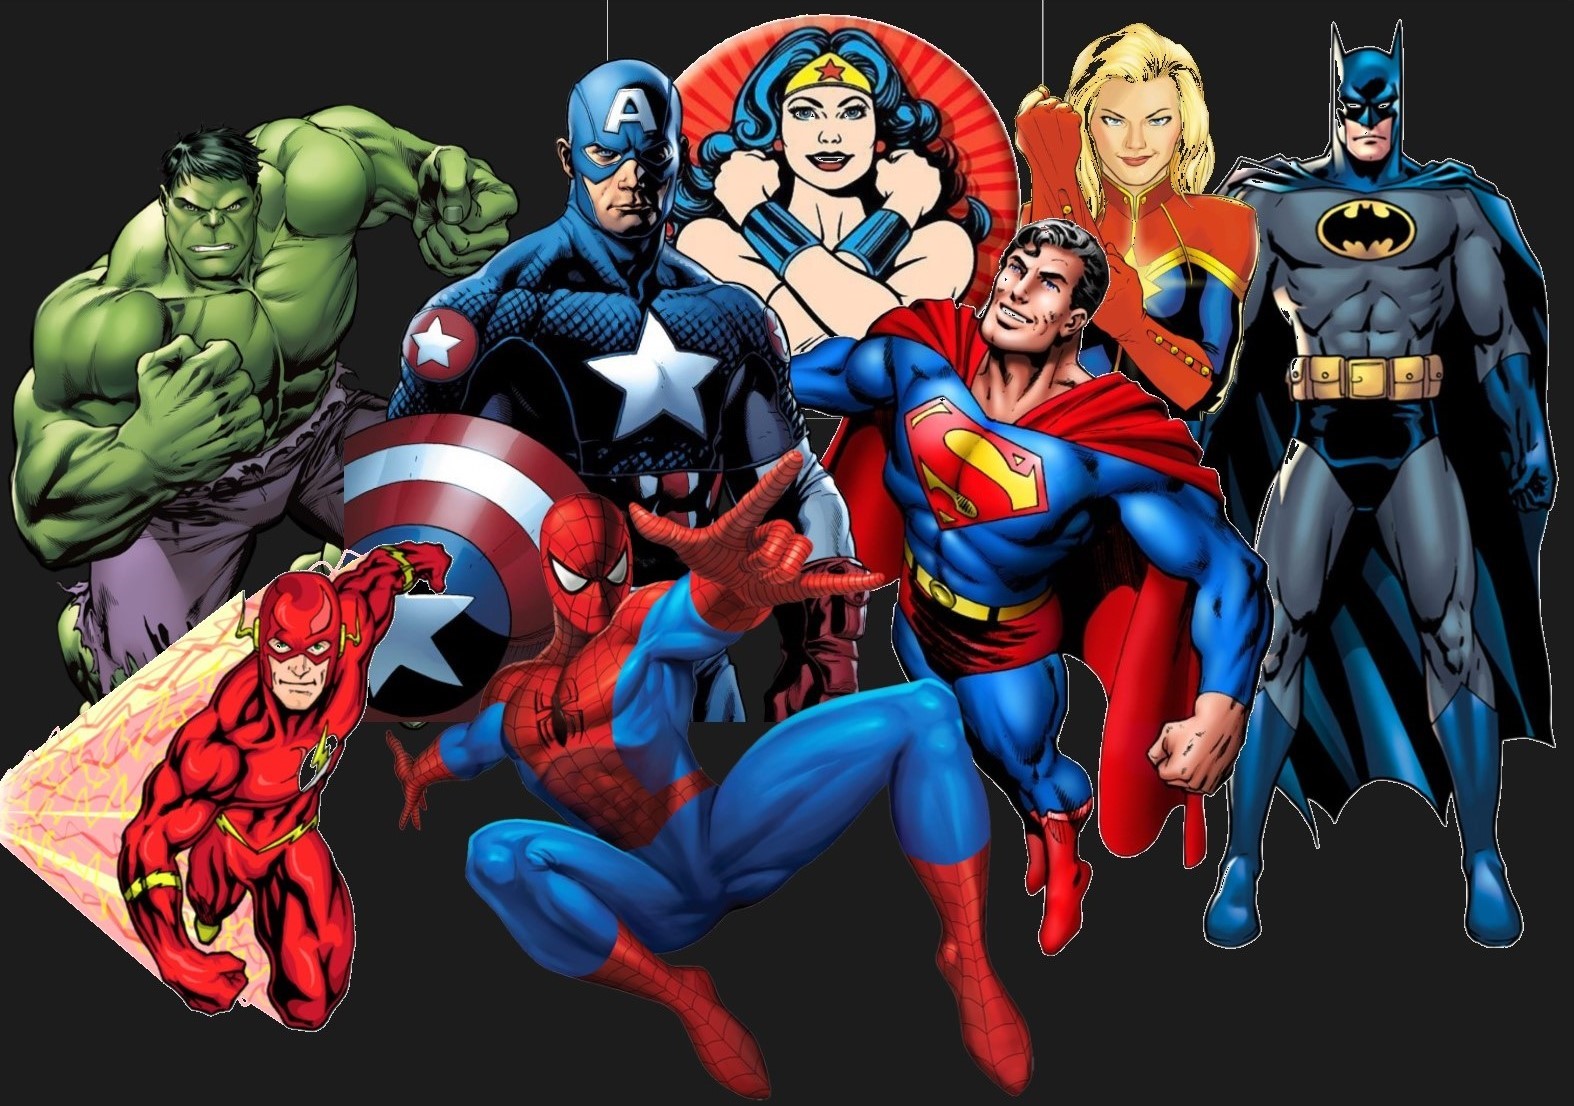 Am super heroes. Супергерои. Супергерои Марвел. Marvel герои. Картинки супергероев.